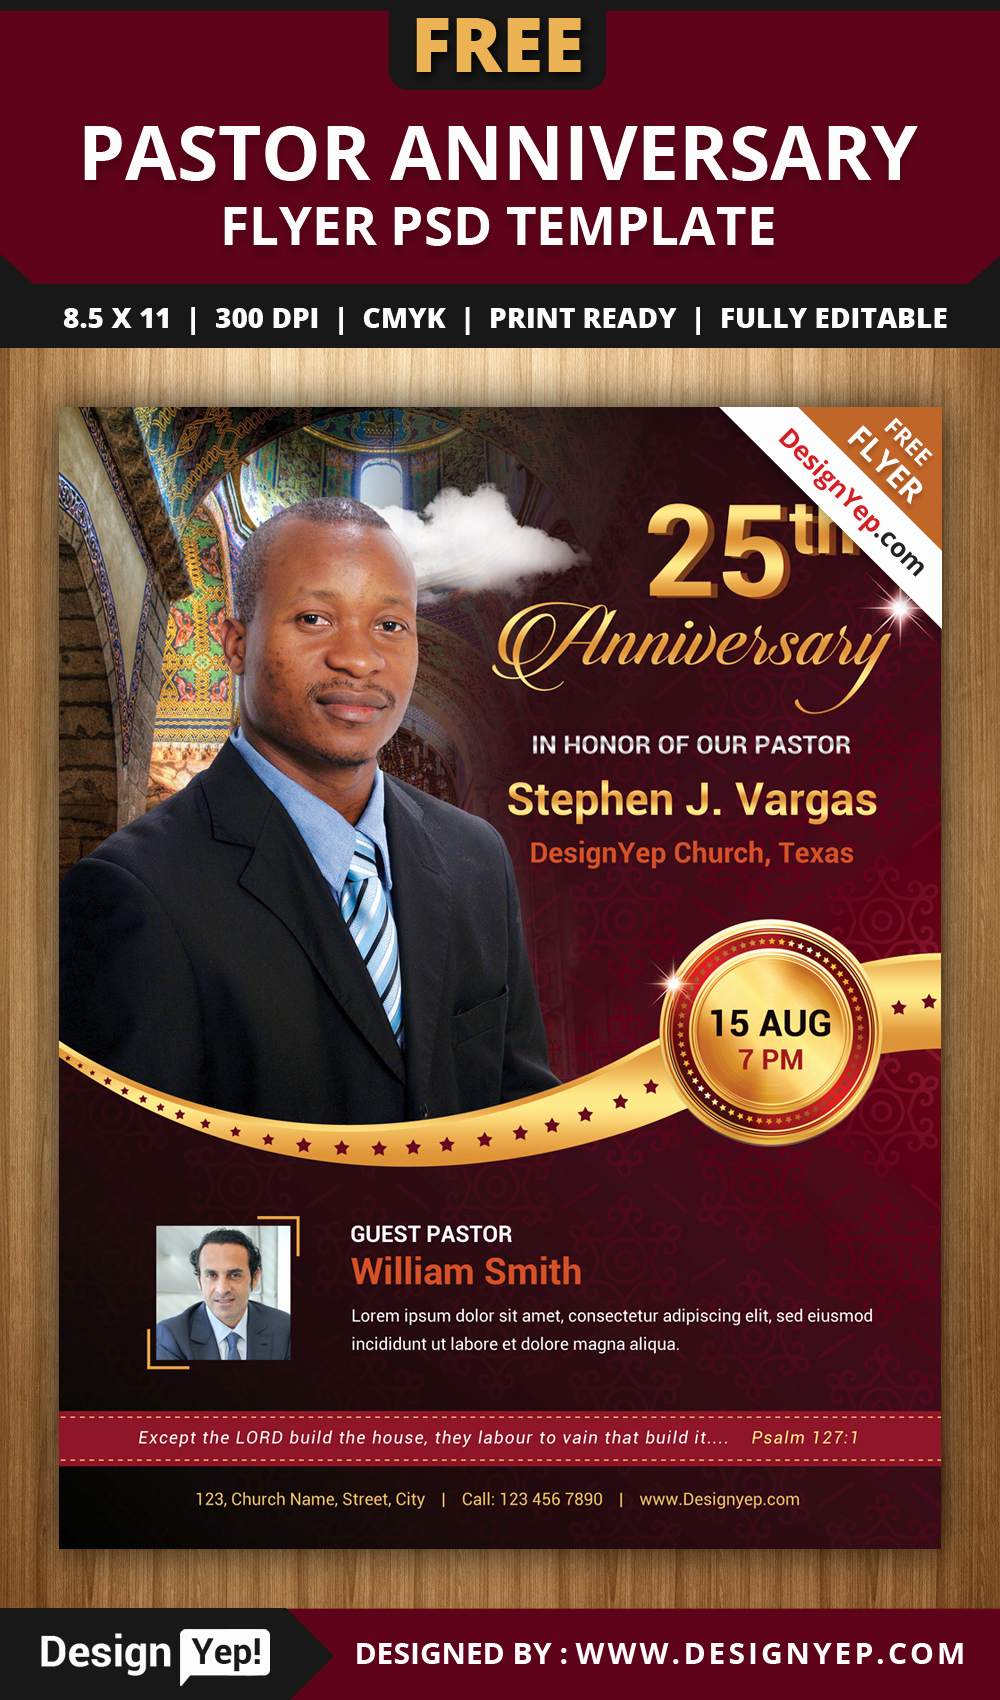 Free Church Flyer Templates Best Of Free Pastor Anniversary Flyer Psd Template Designyep